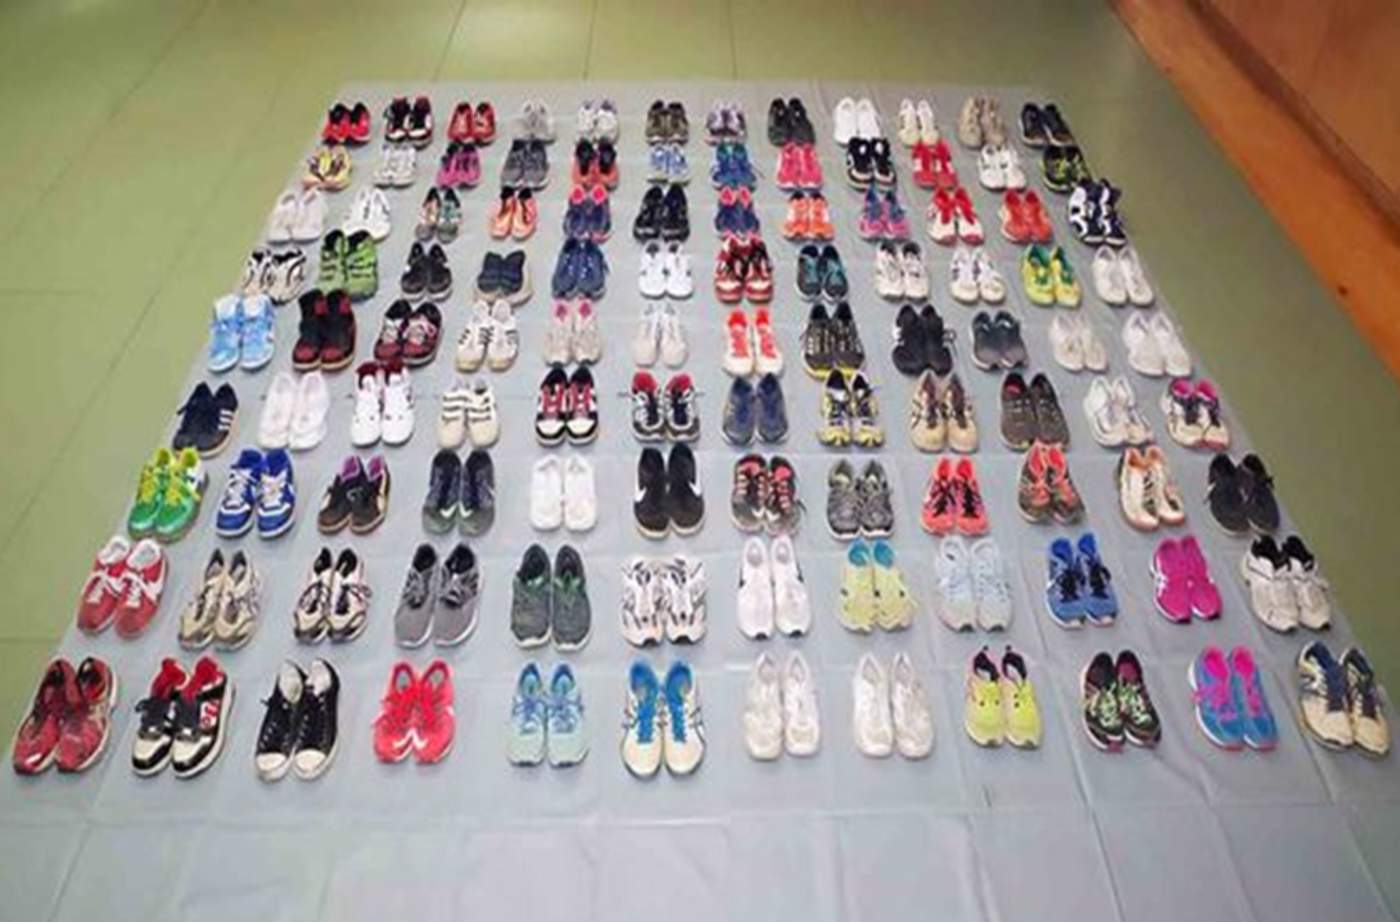 Le encontraron 70 pares de zapatos diferentes. (INTERNET)